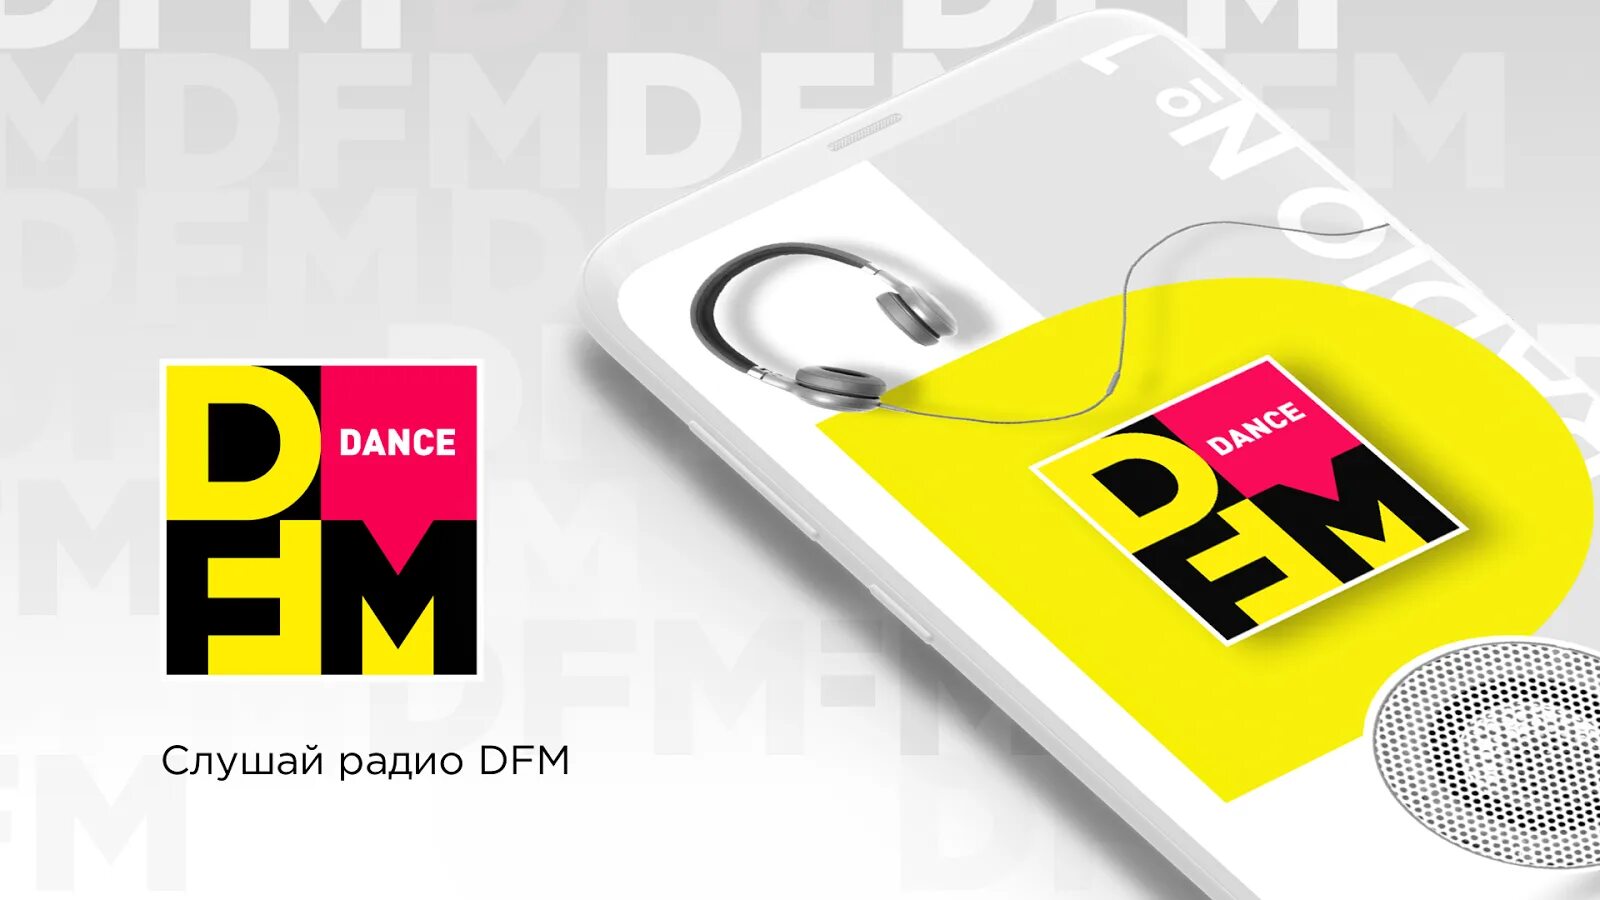 DFM. DFM радио. Сайт радиостанции DFM. Логотип ди ФМ. Радио ди фм сегодня